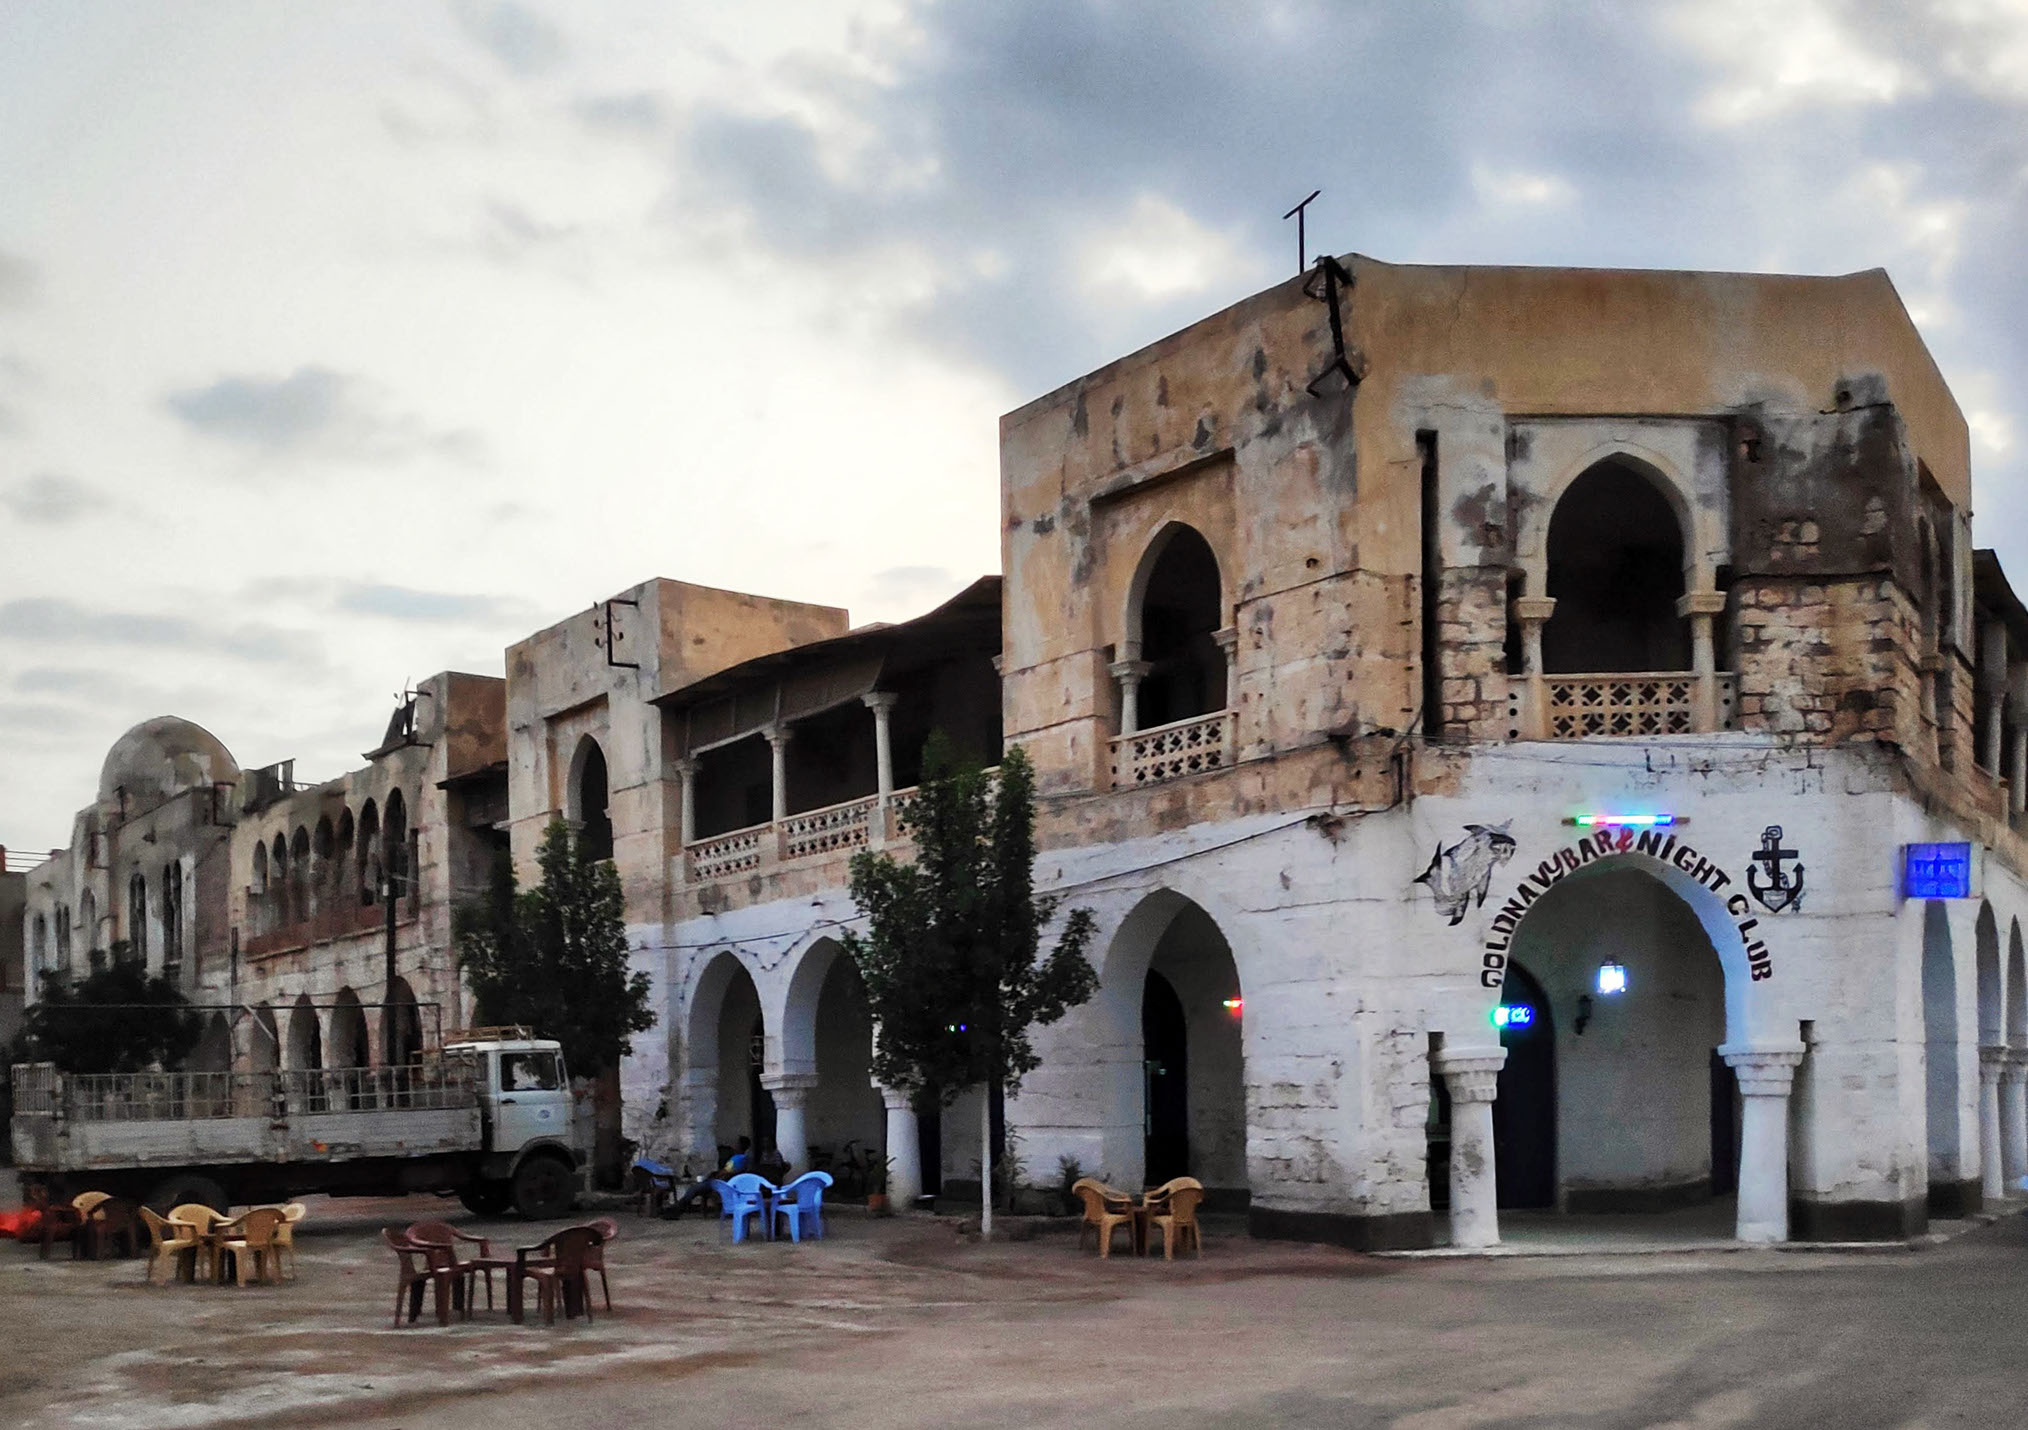 bar and night club inside the ruined city of Massawa in Eritrea